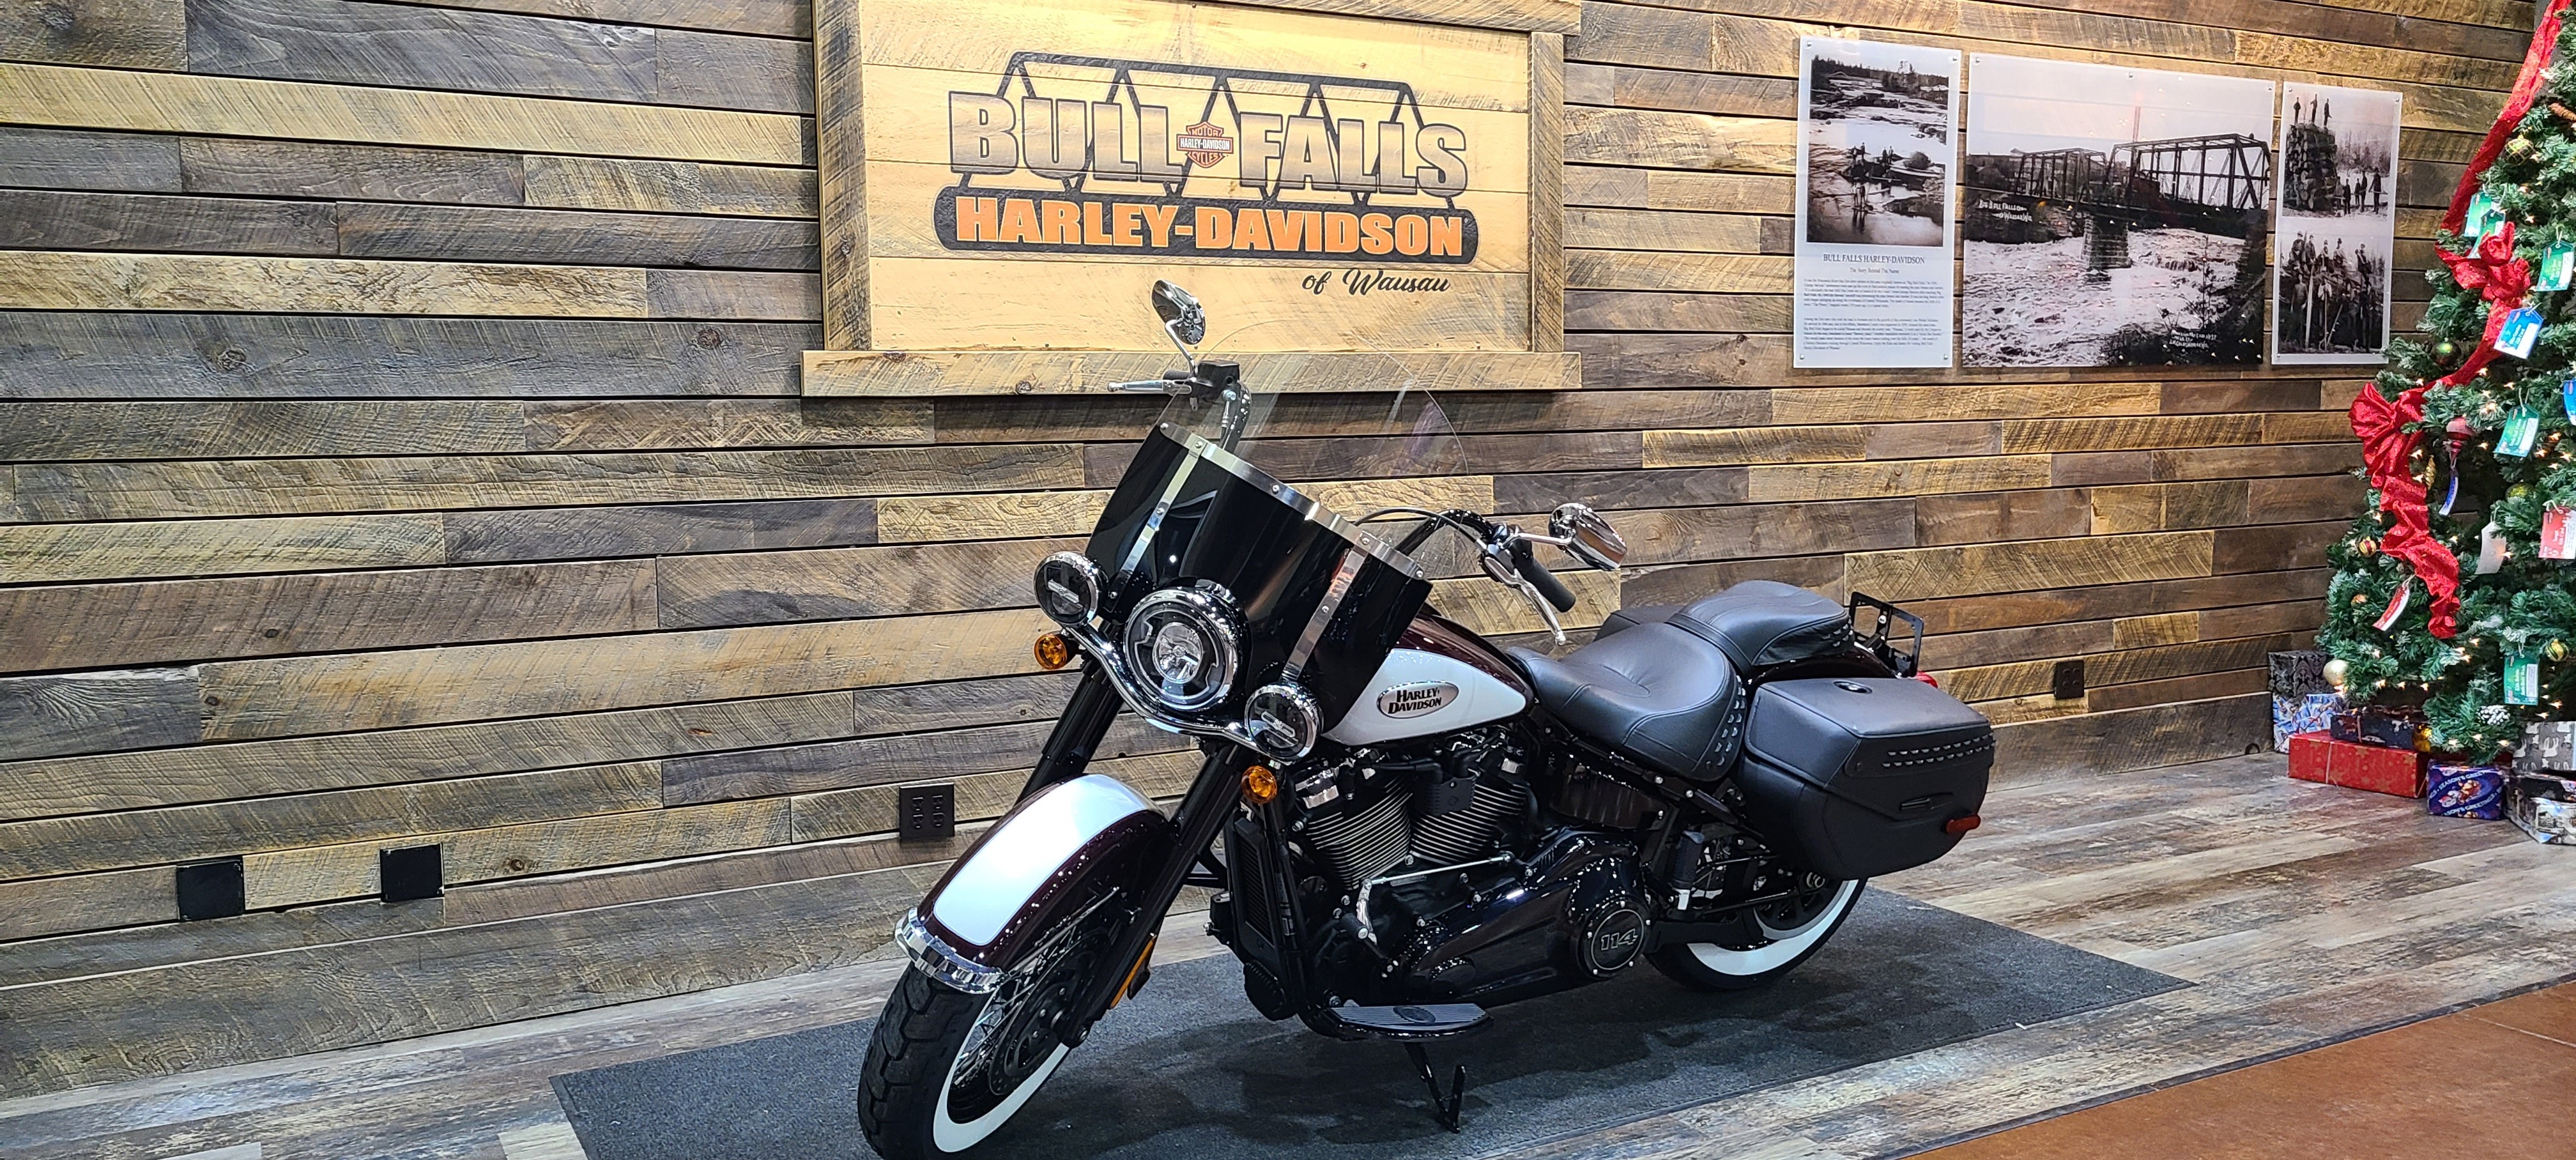 2021 Harley-Davidson Cruiser Heritage Classic S at Bull Falls Harley-Davidson